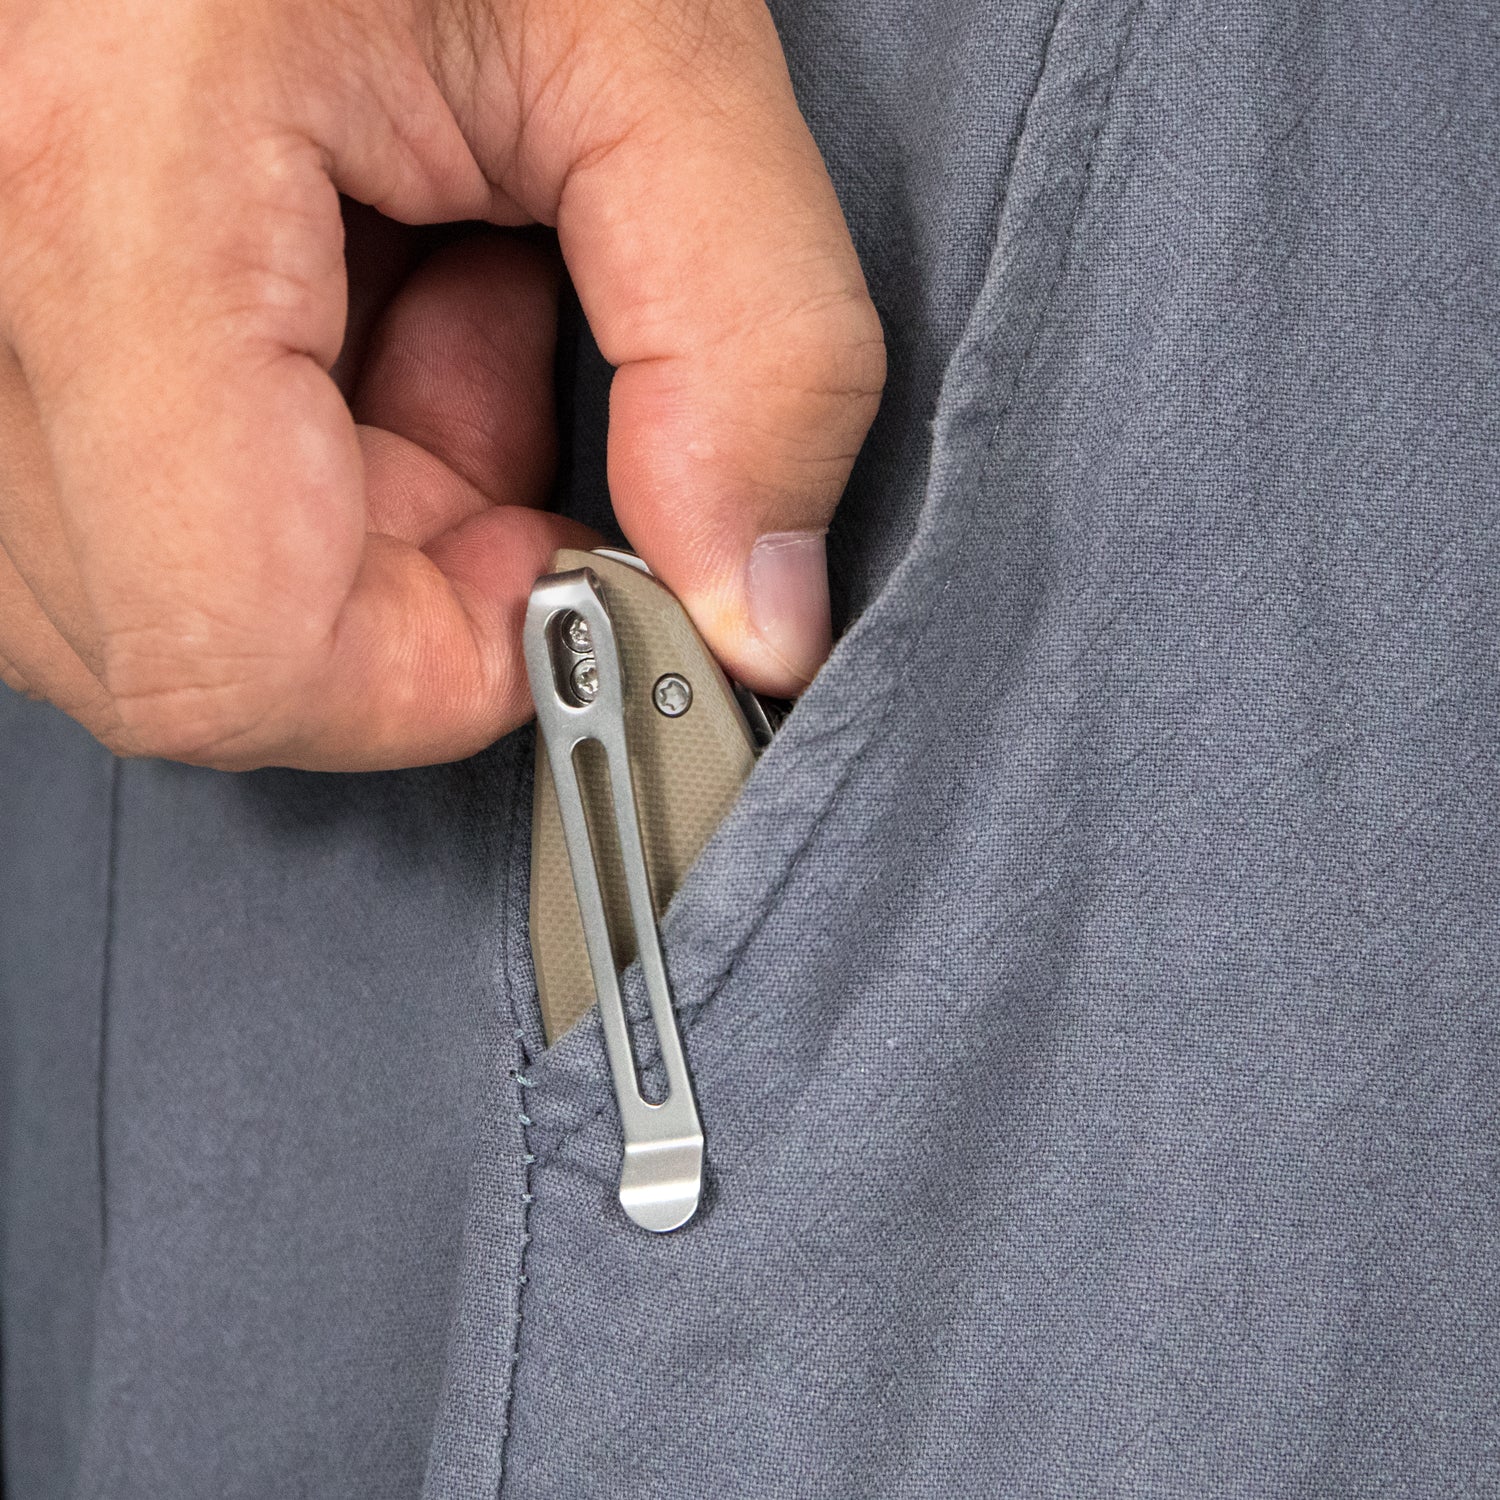 Kubey Nova Liner Lock Flipper Folding Pocket Knife Tan G10 Handle Satin D2 KU117F